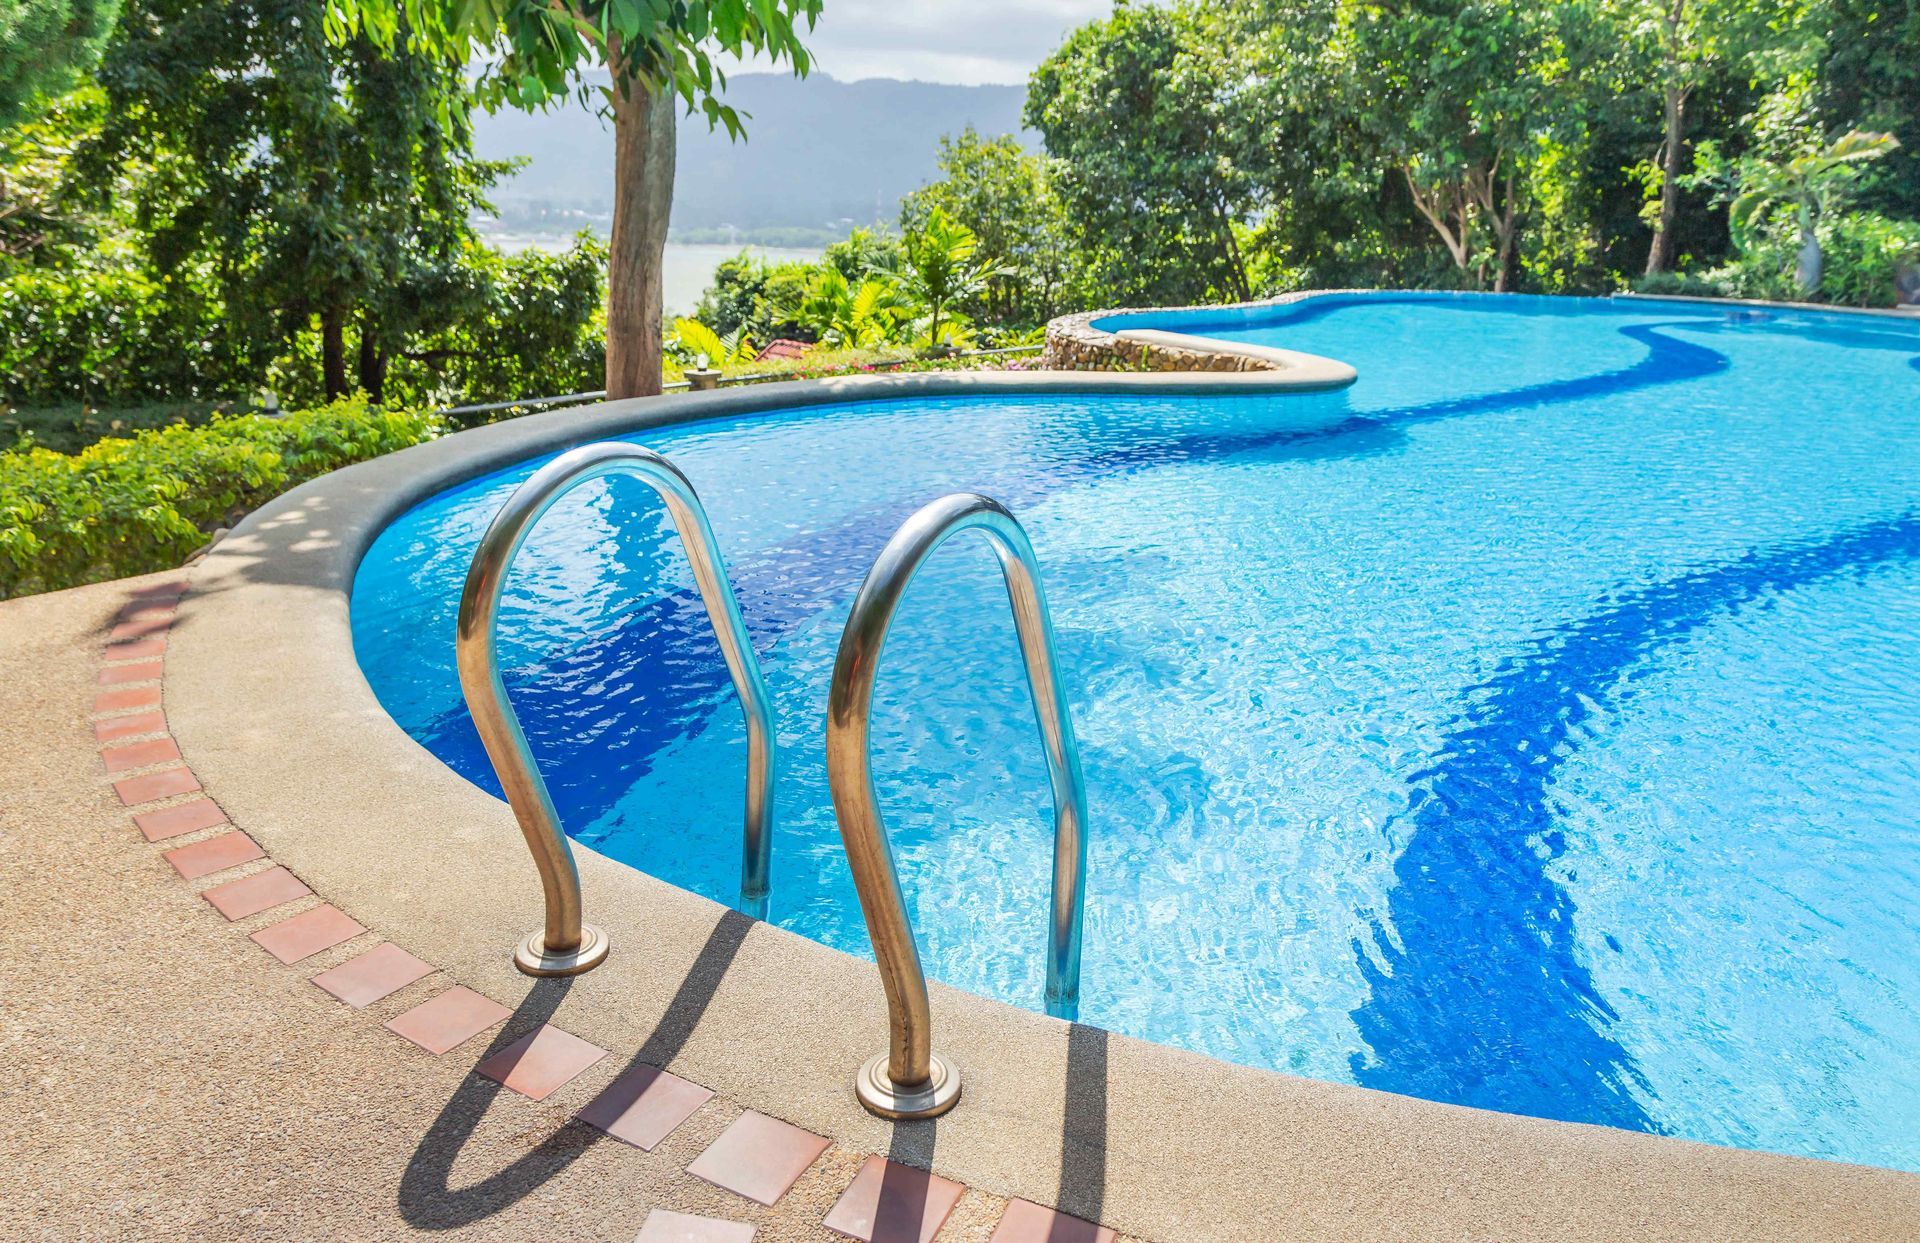 Gorgeous Swimming Pool Next to palm trees